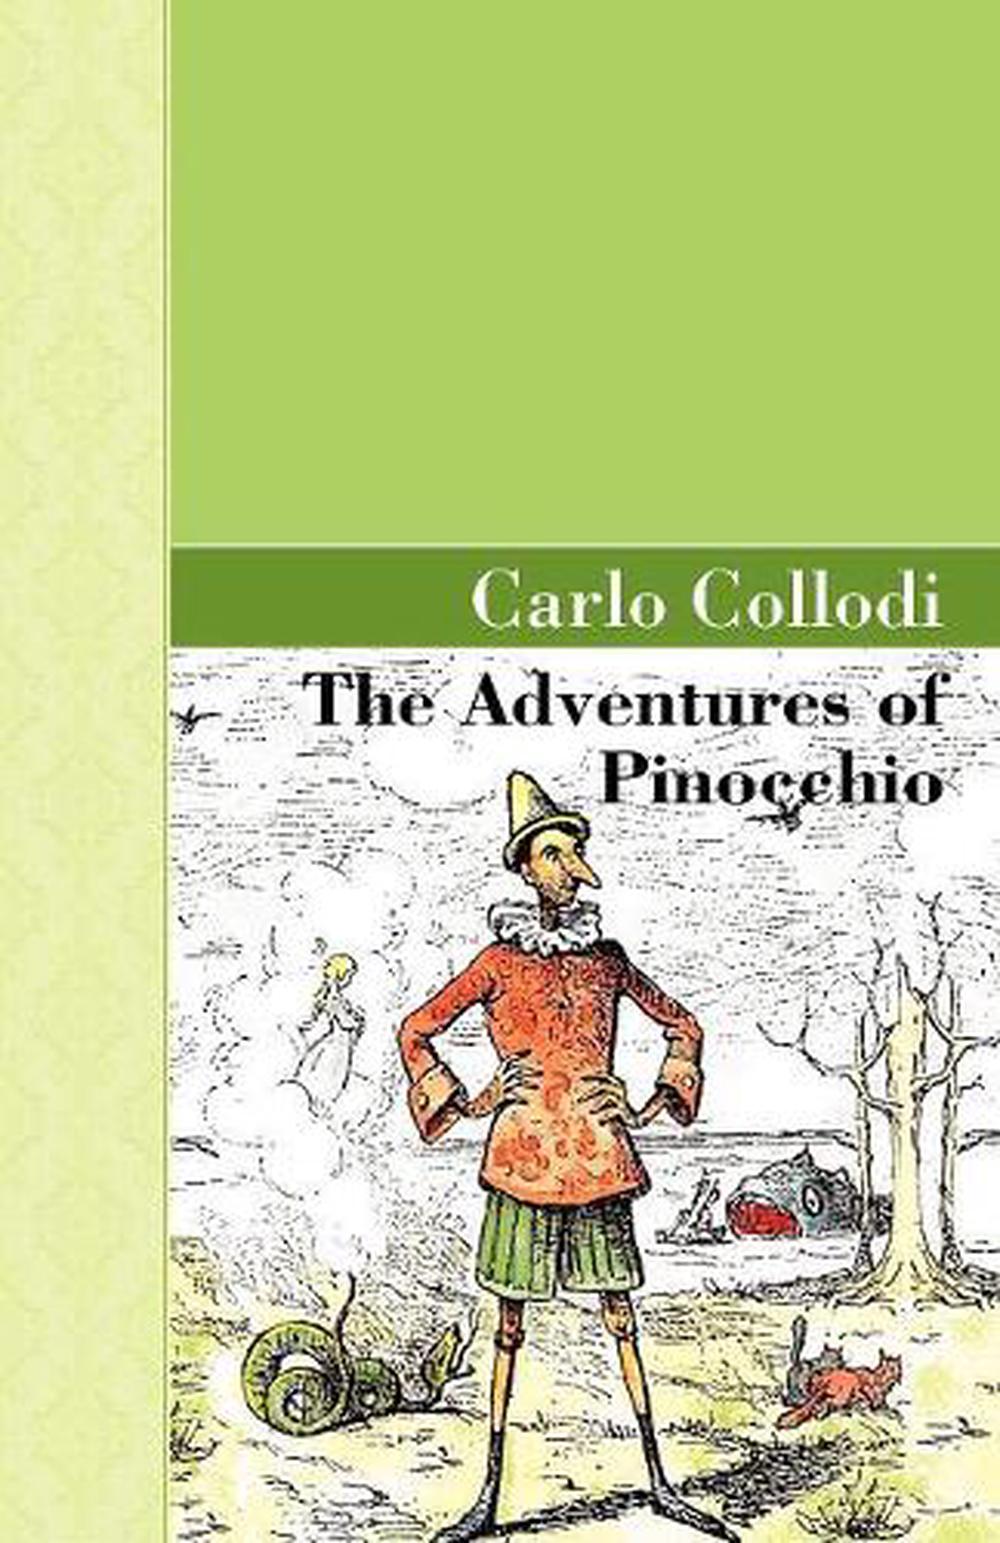 pinocchio story in english pdf